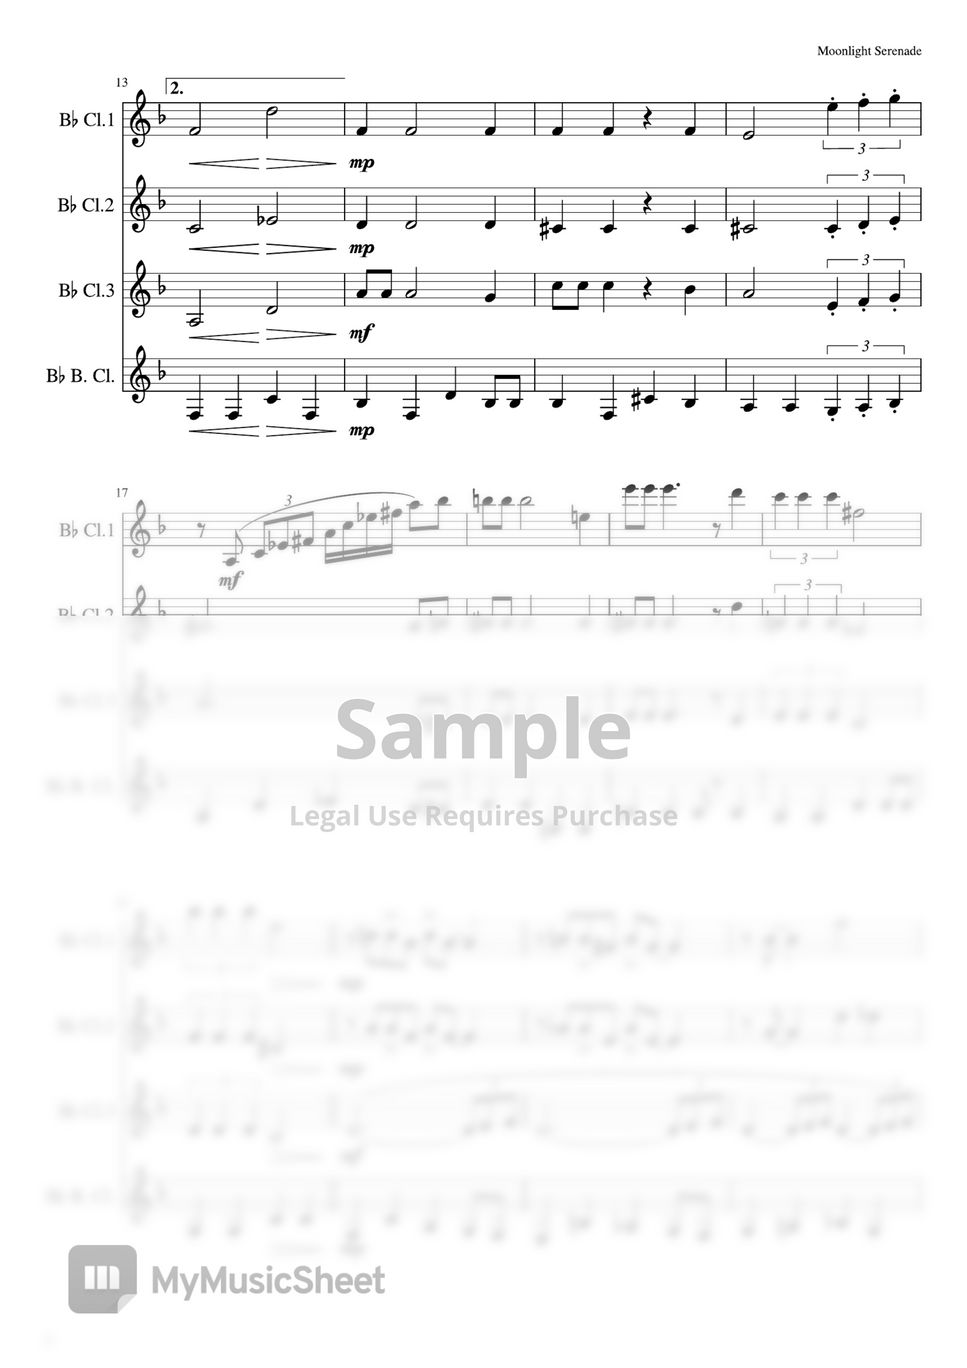 Glenn Miller - Moonlight Serenade for Clarinet Quartet (Clarinet Quartet 클라리넷콰르텟) by Hyeonjong SONG